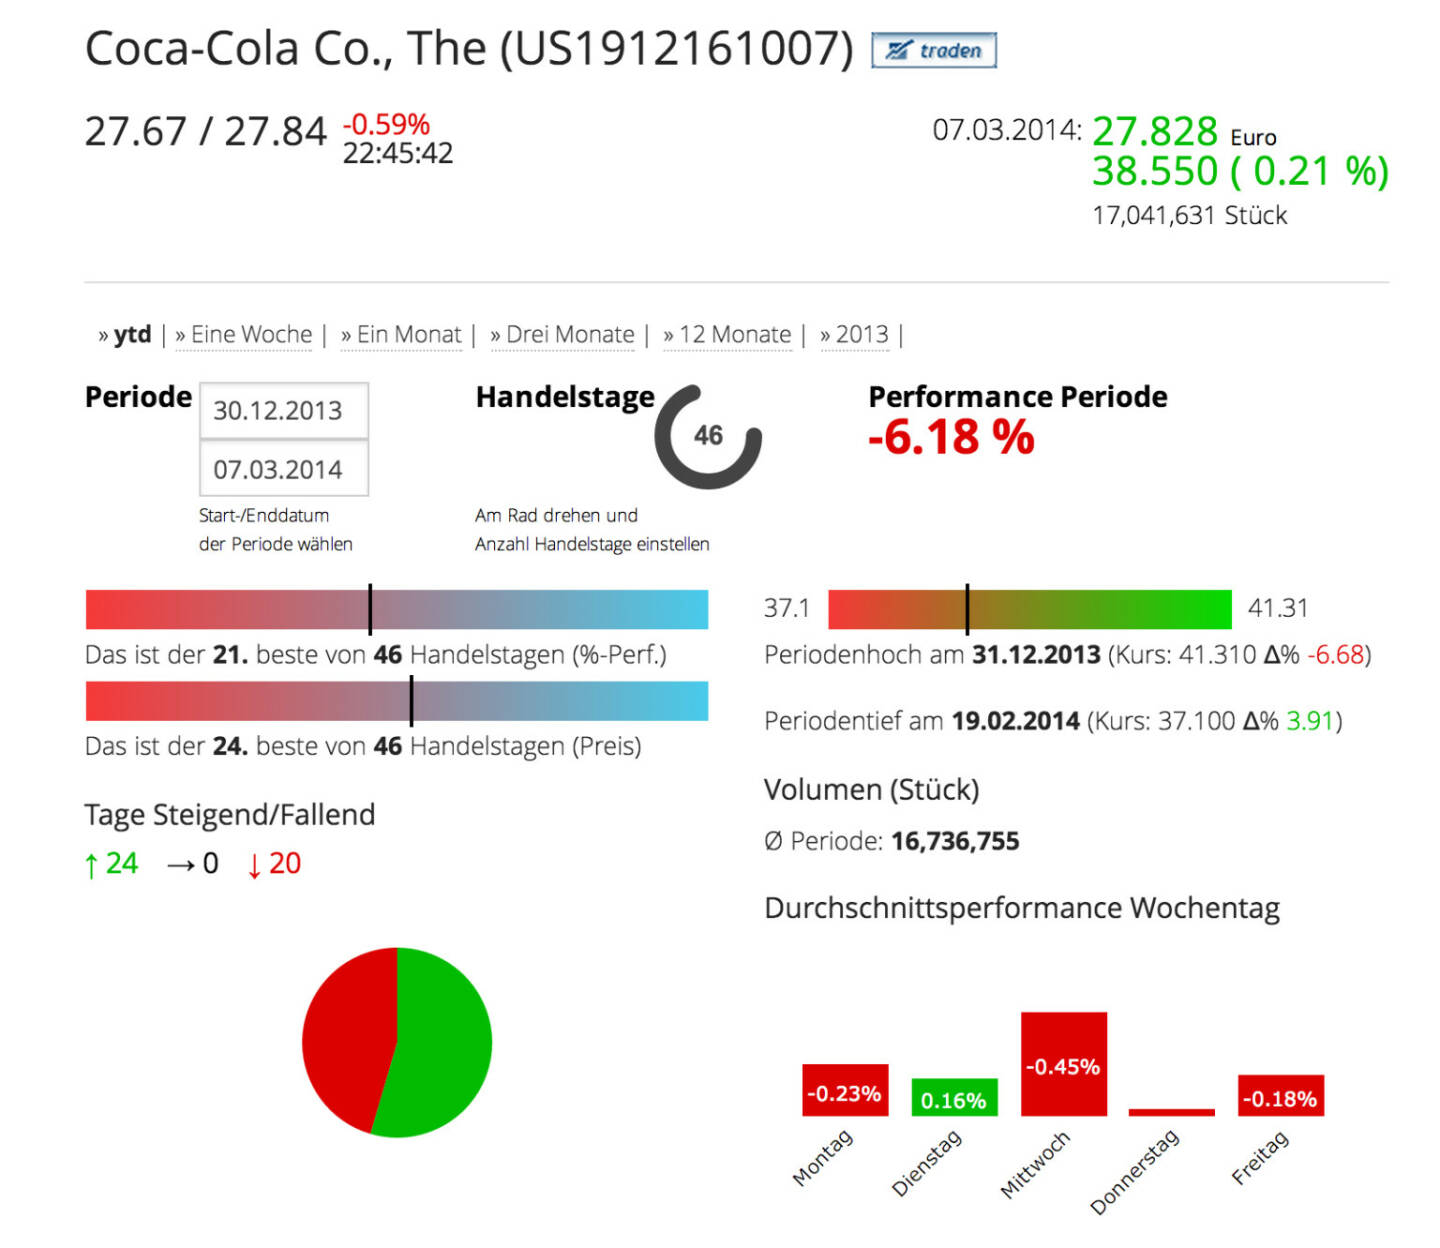 Die Coca-Cola Company im Börse Social Network, http://boerse-social.com/launch/aktie/coca-cola_co_the